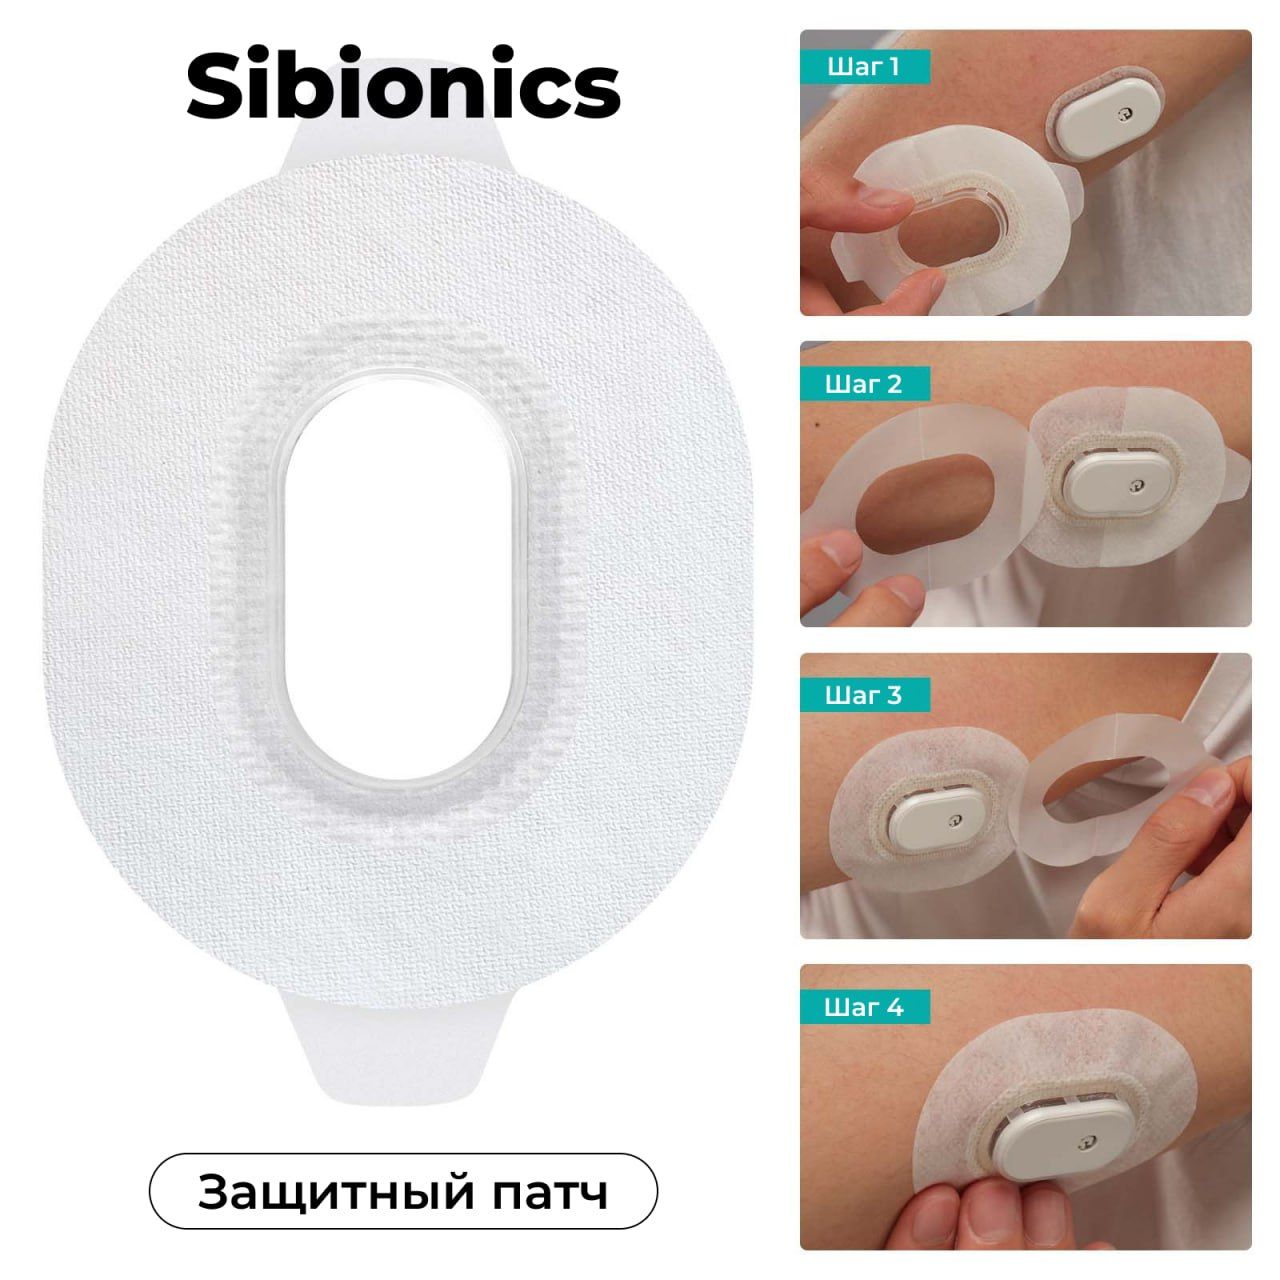 Sibionics gs1. Сибионикс датчик. Sibionics. Сибионикс.